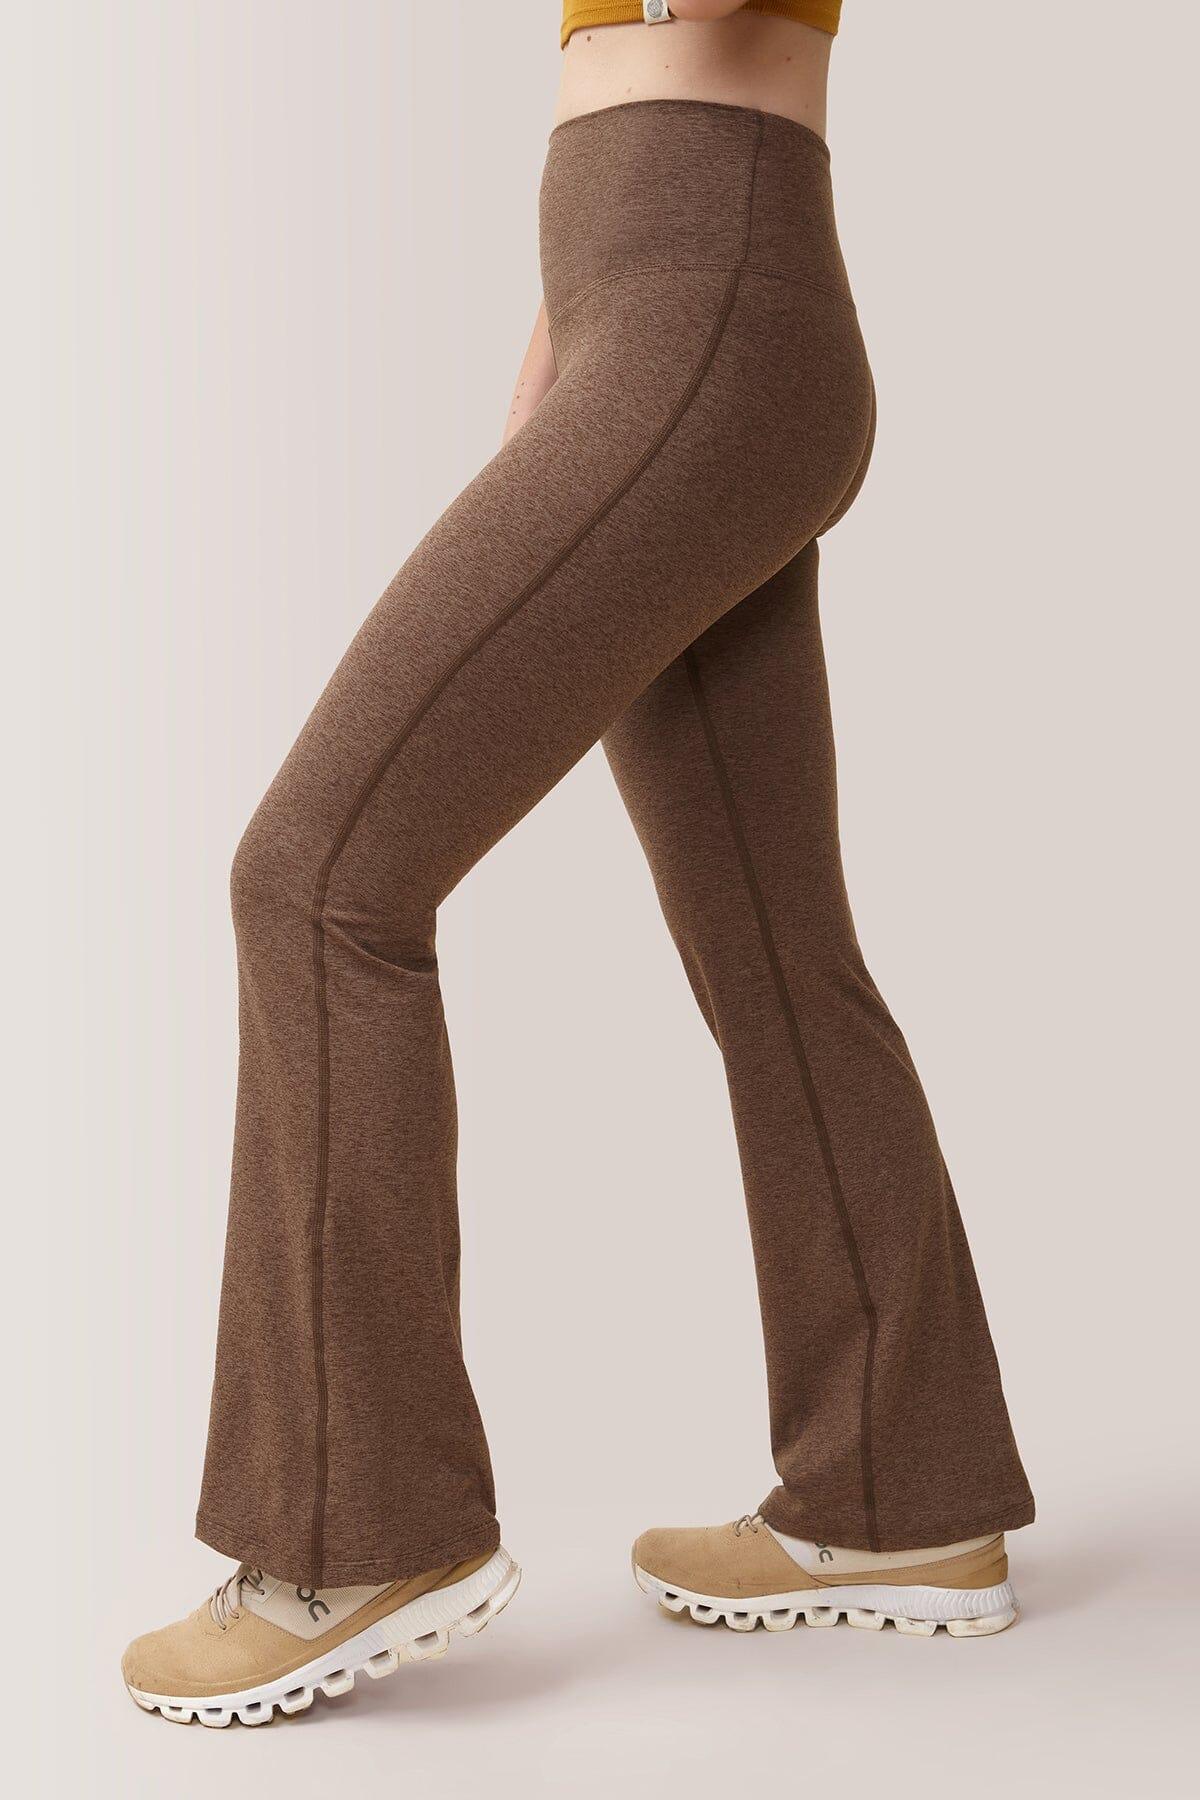 Femme qui porte les leggings TGIF de Rose Boreal./ Women wearing the TGIF Wide Leg Legging from Rose Boreal. -Truffle / Truffe